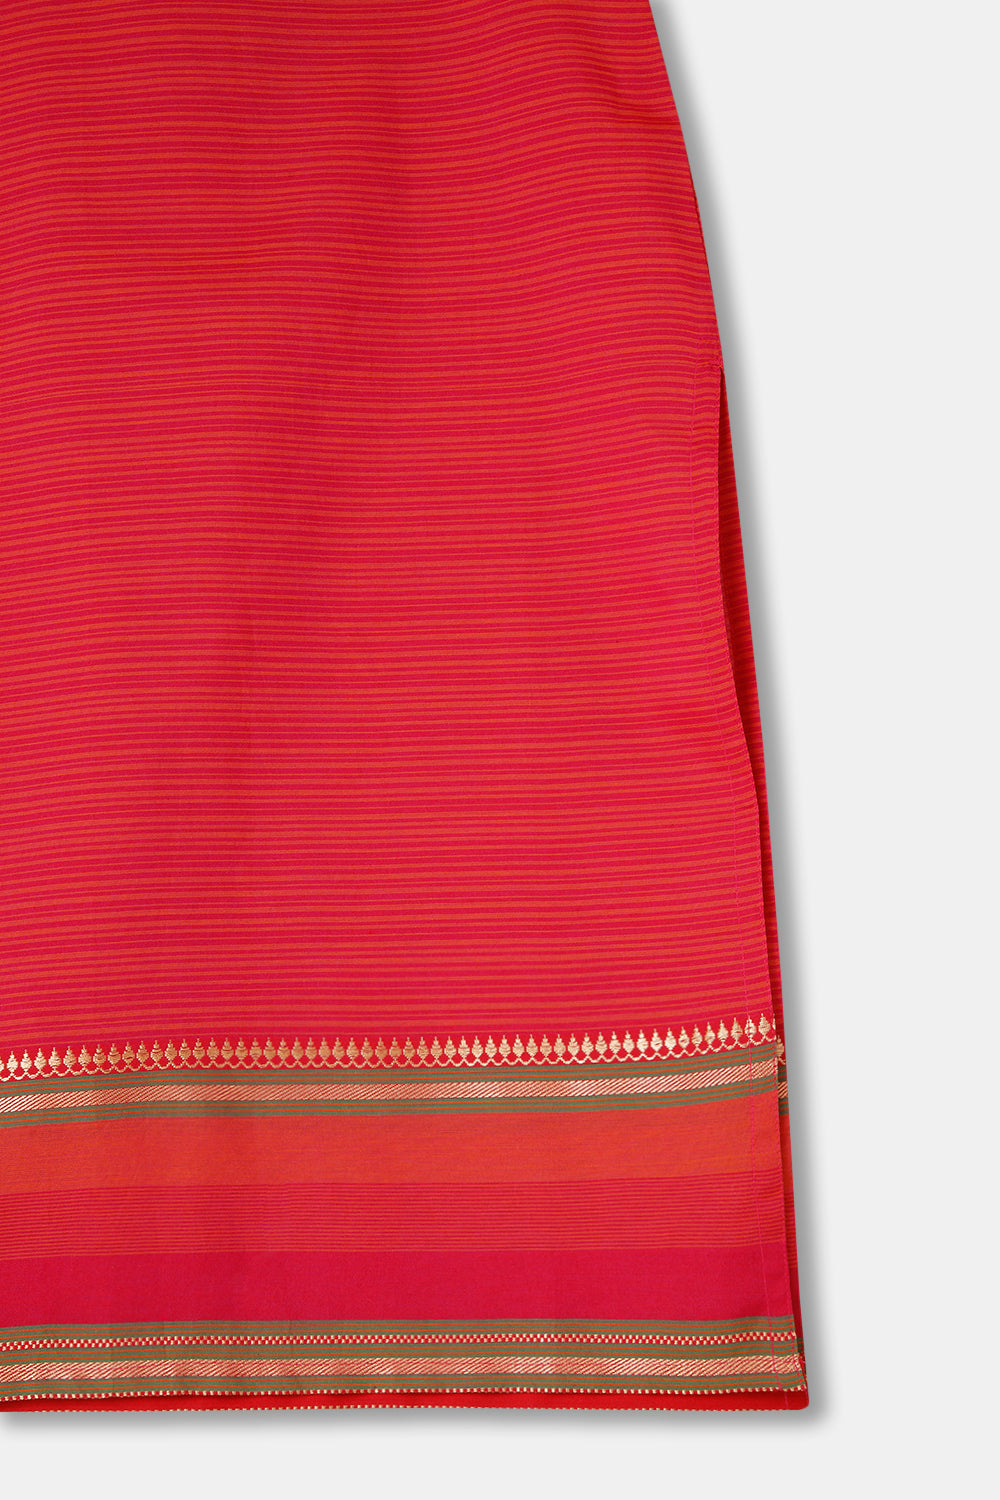 Chittythalli Girls Ethnic wear Cotton blend  Kurthi with Square Neck Cap Sleeve - Pink - KU03